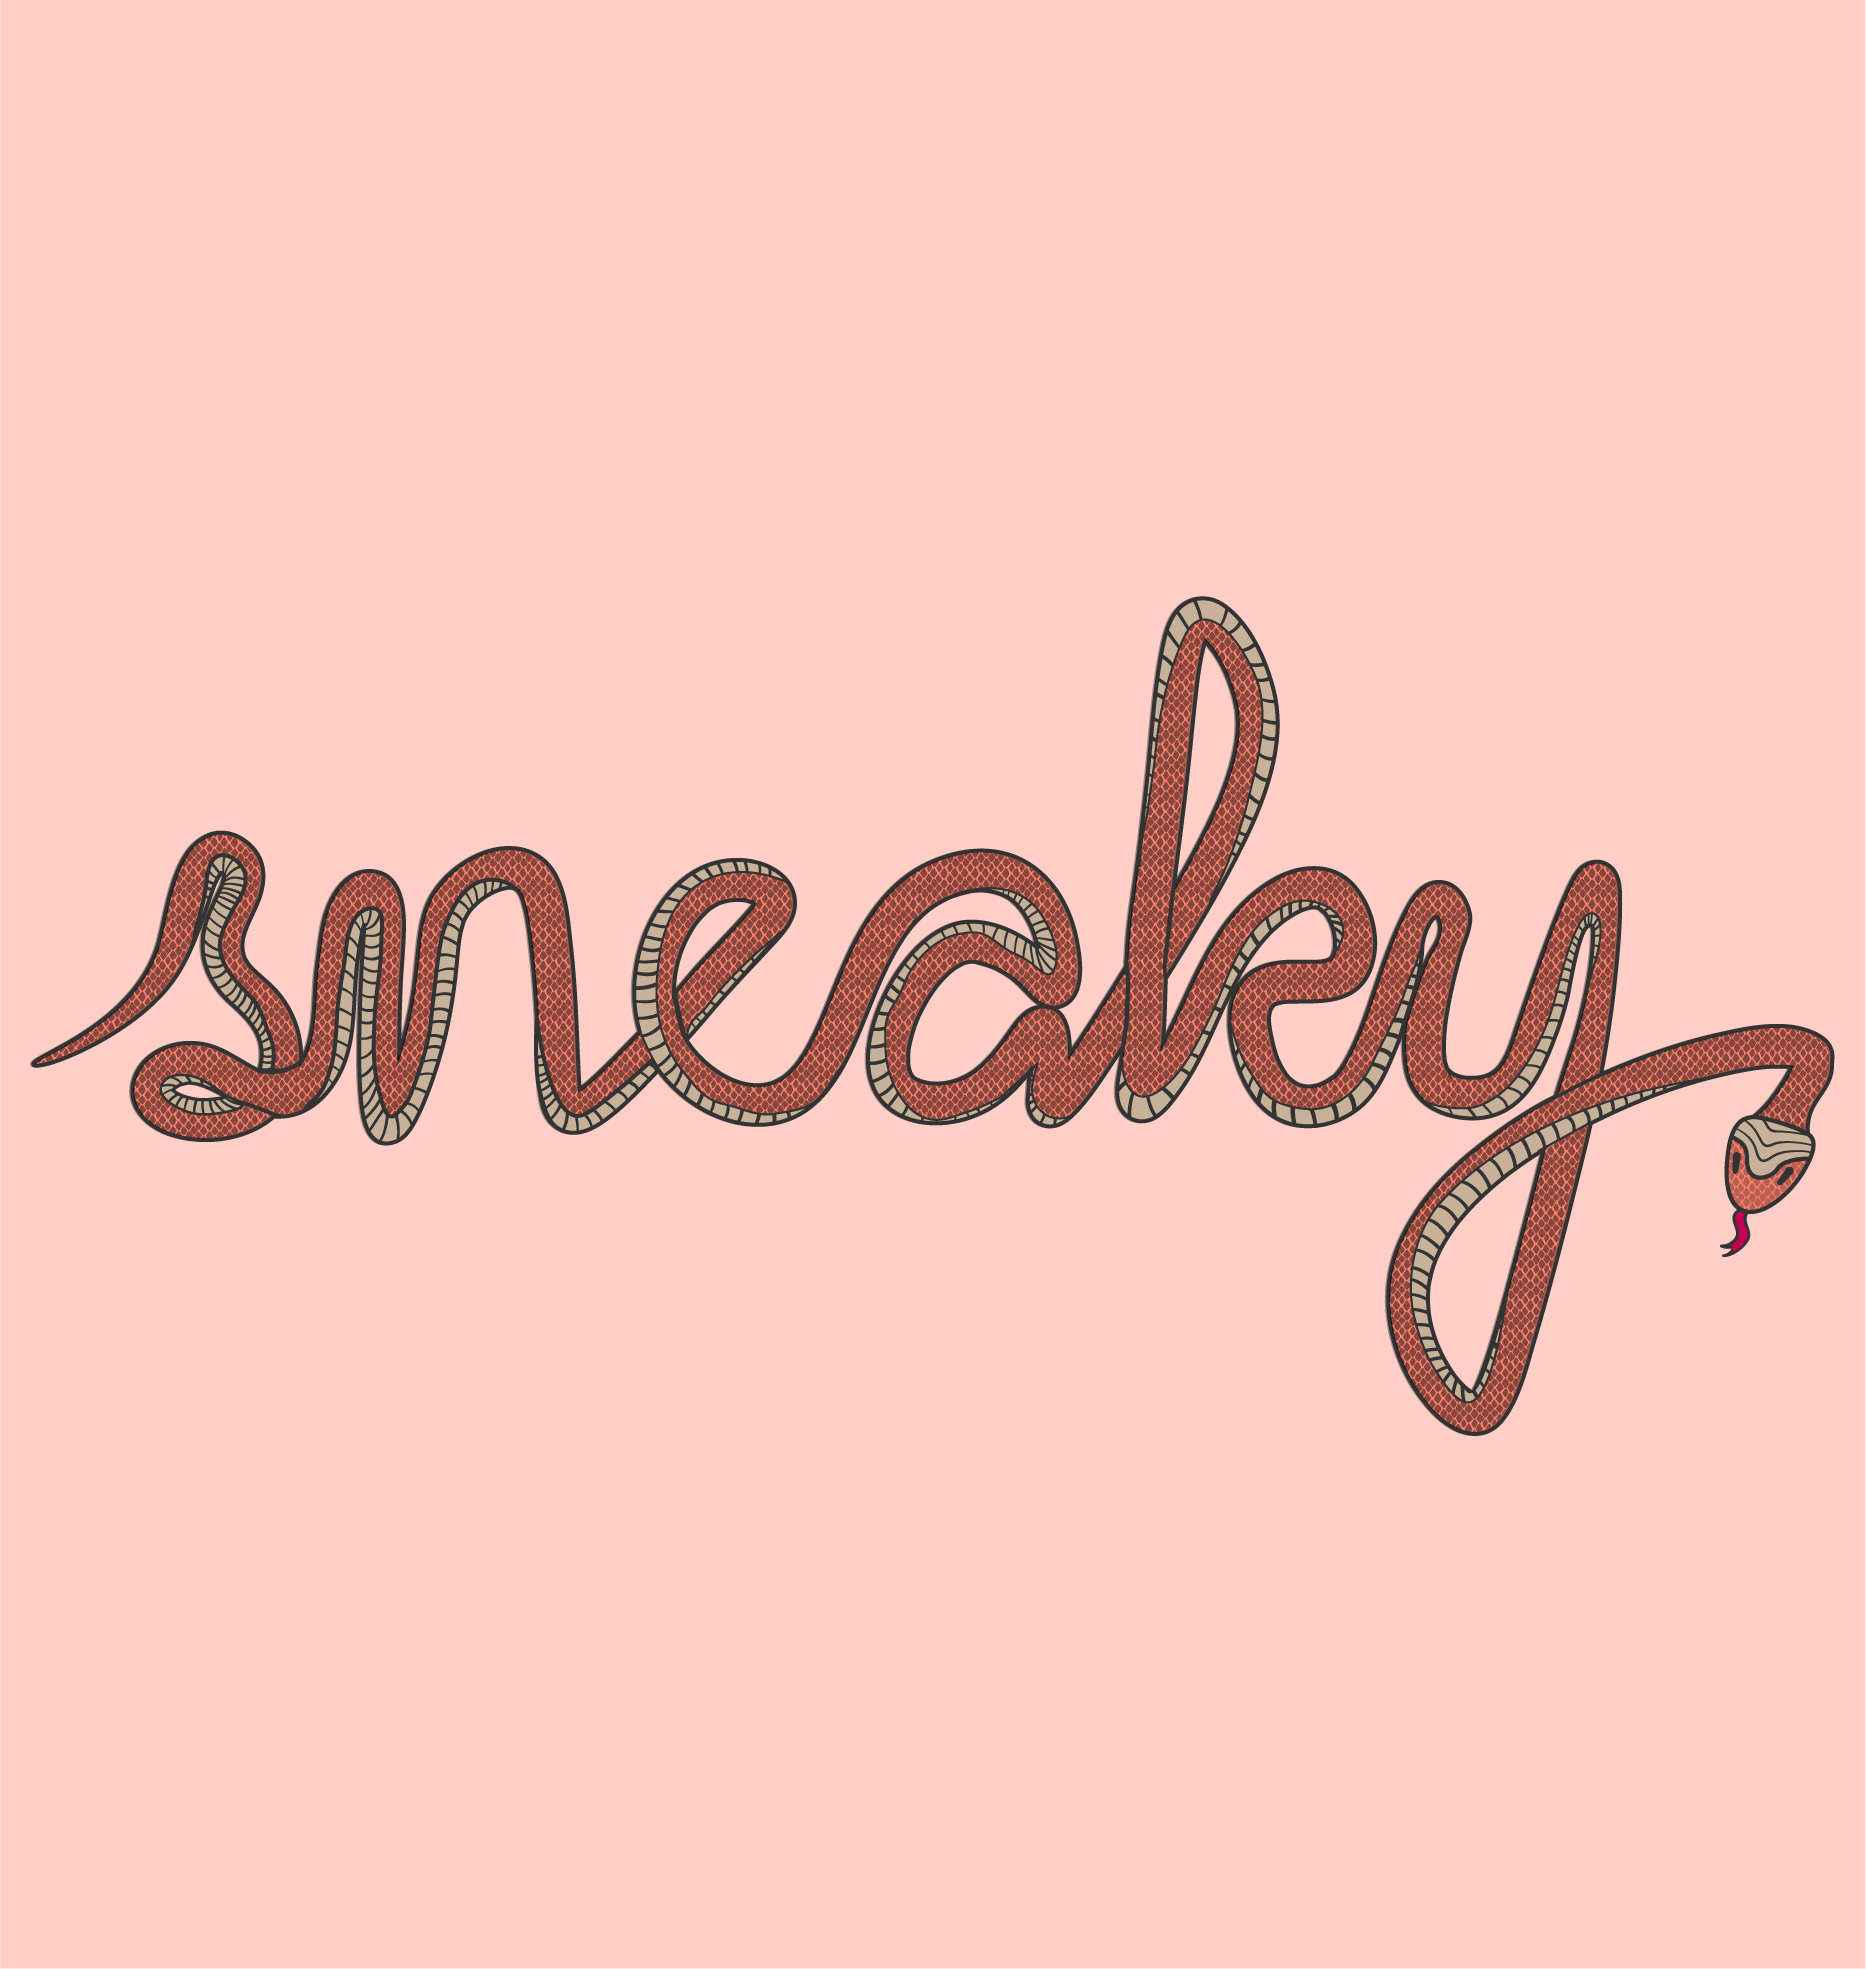 Sneaky_studiorow